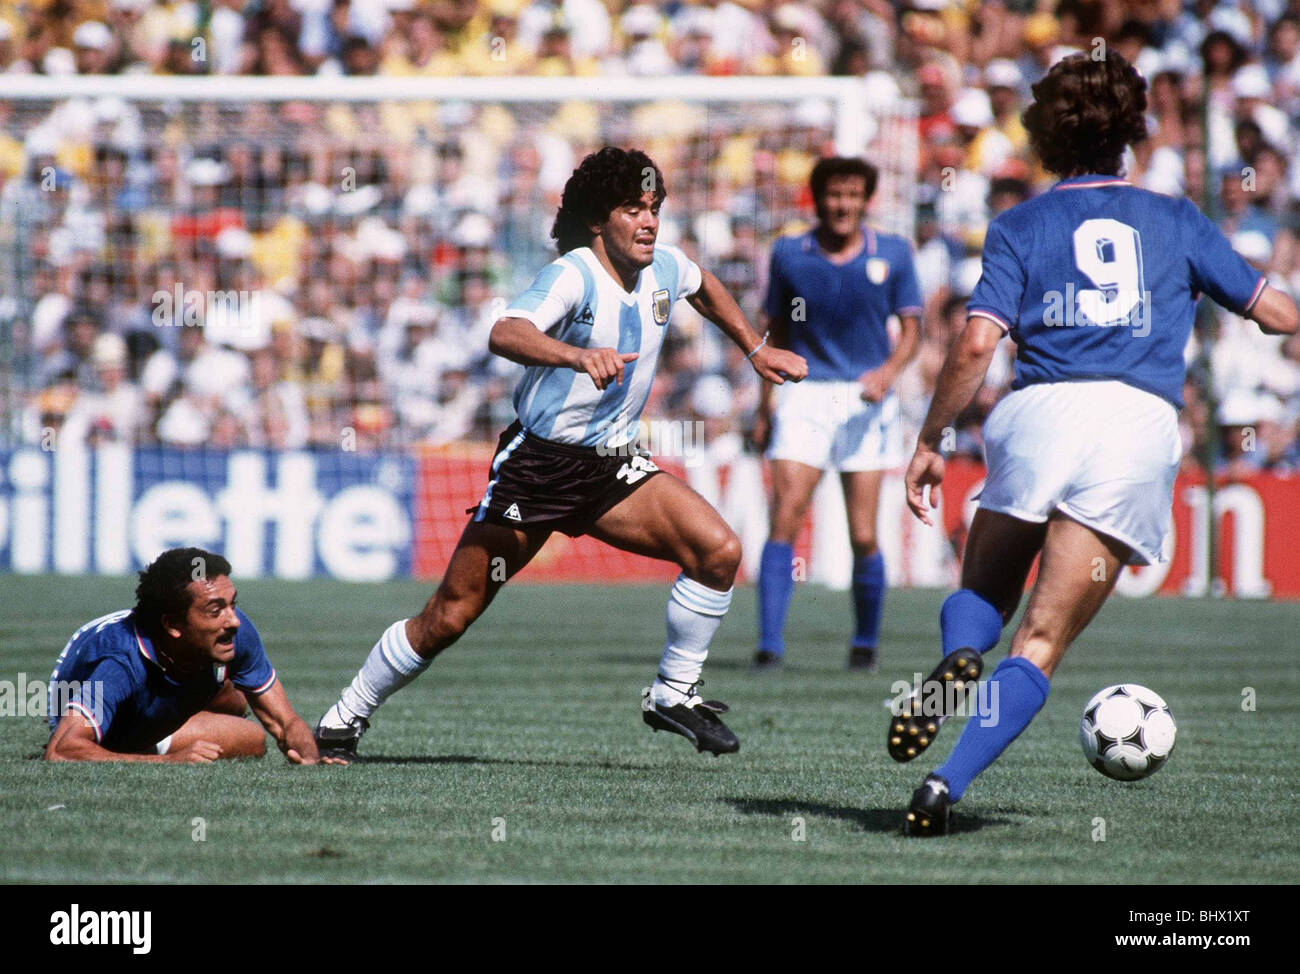 WM 1982 Italien 2 Argentinien 1. Maradona Blätter Platt Claudio Gentile da Giancarlo Antognoni (9) Kugel abfangen versucht Stockfoto